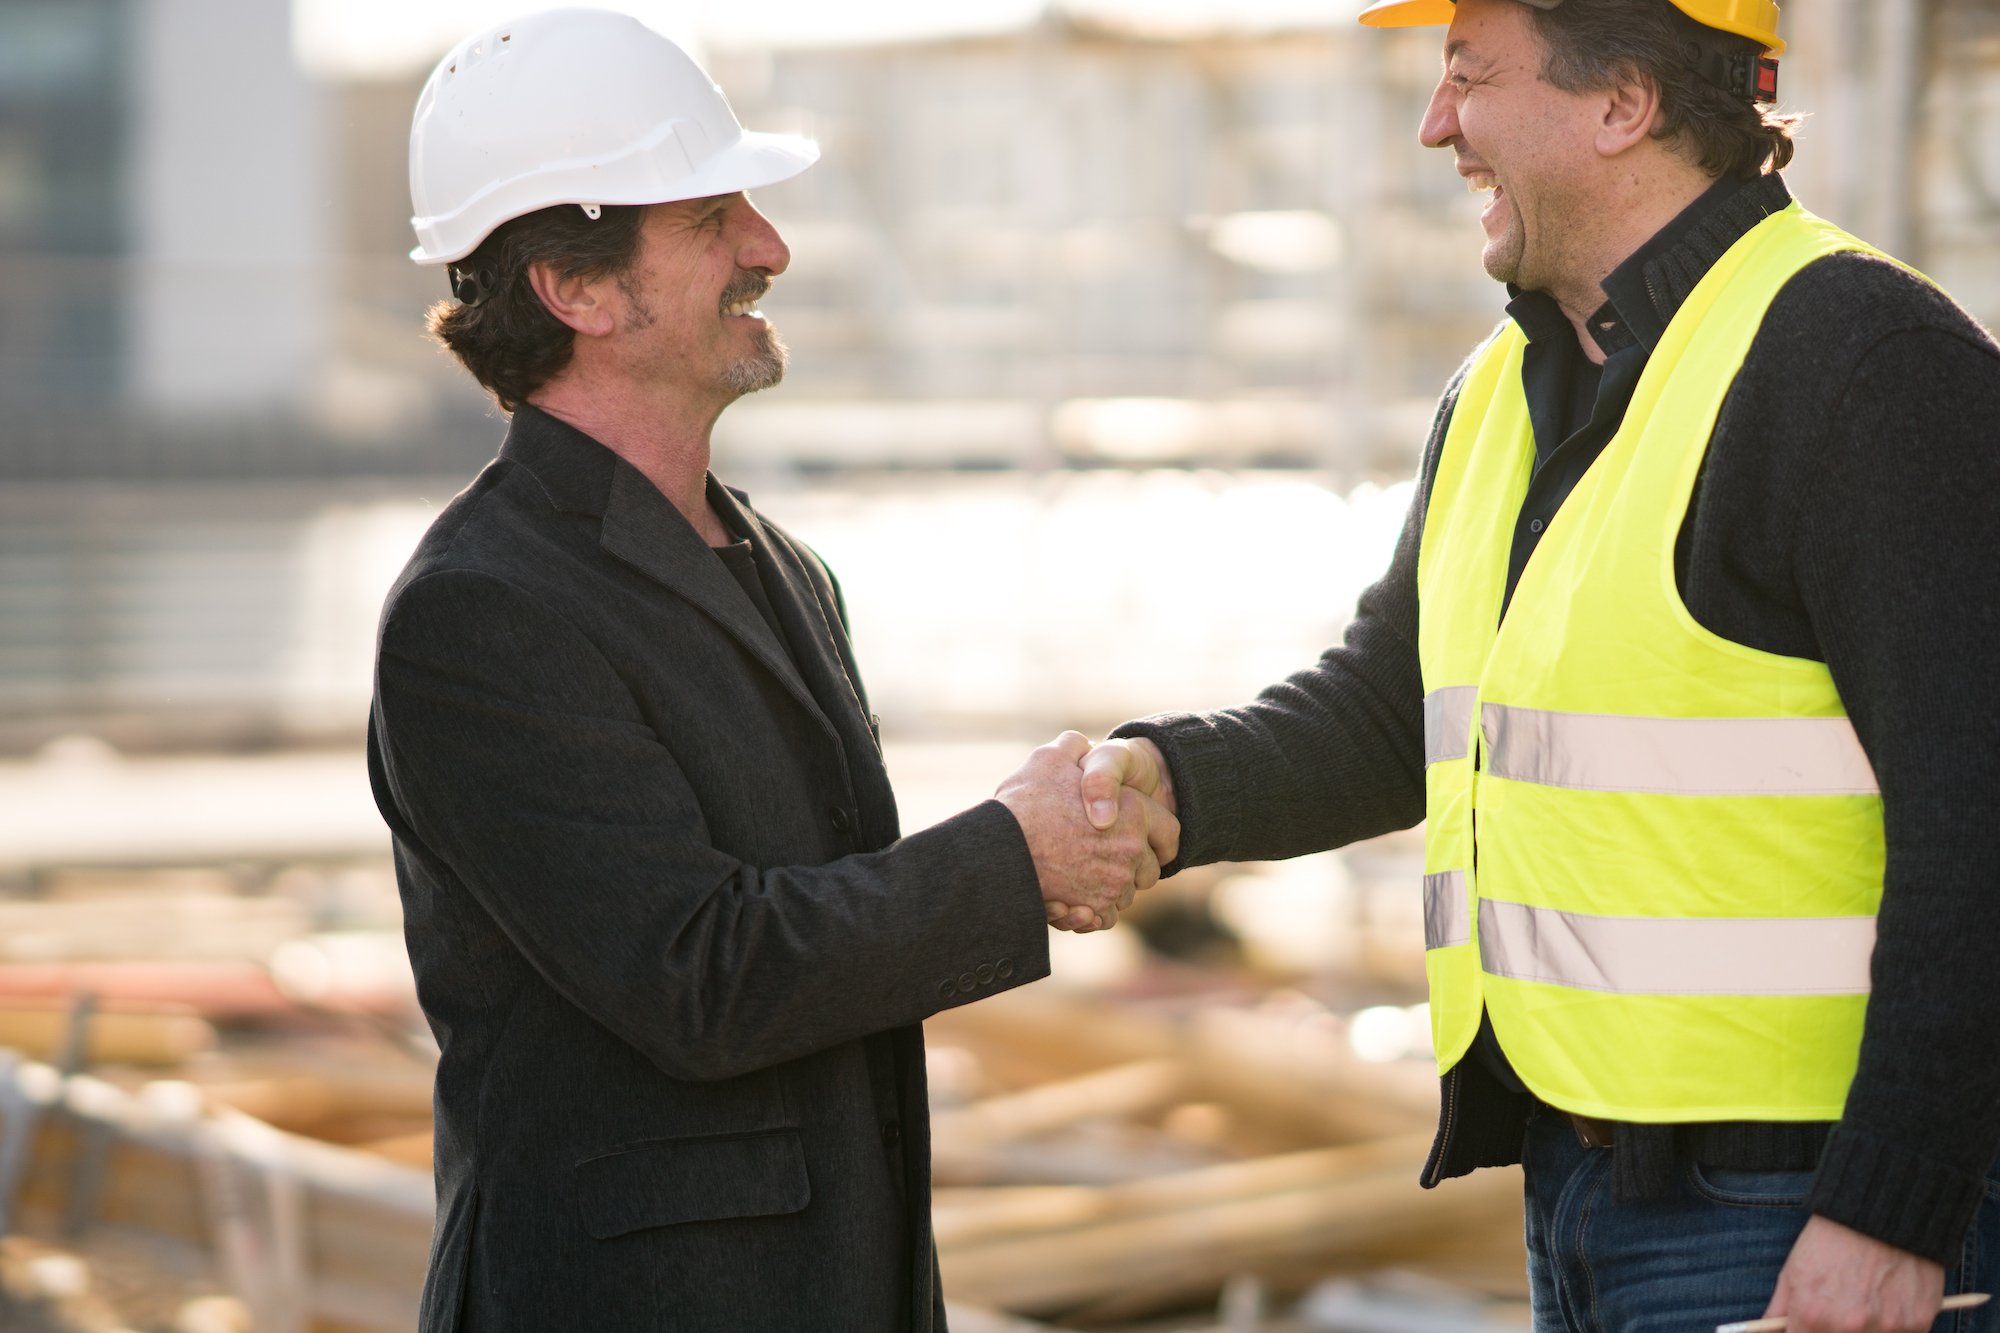 men shaking hands on job site wearing hard hats